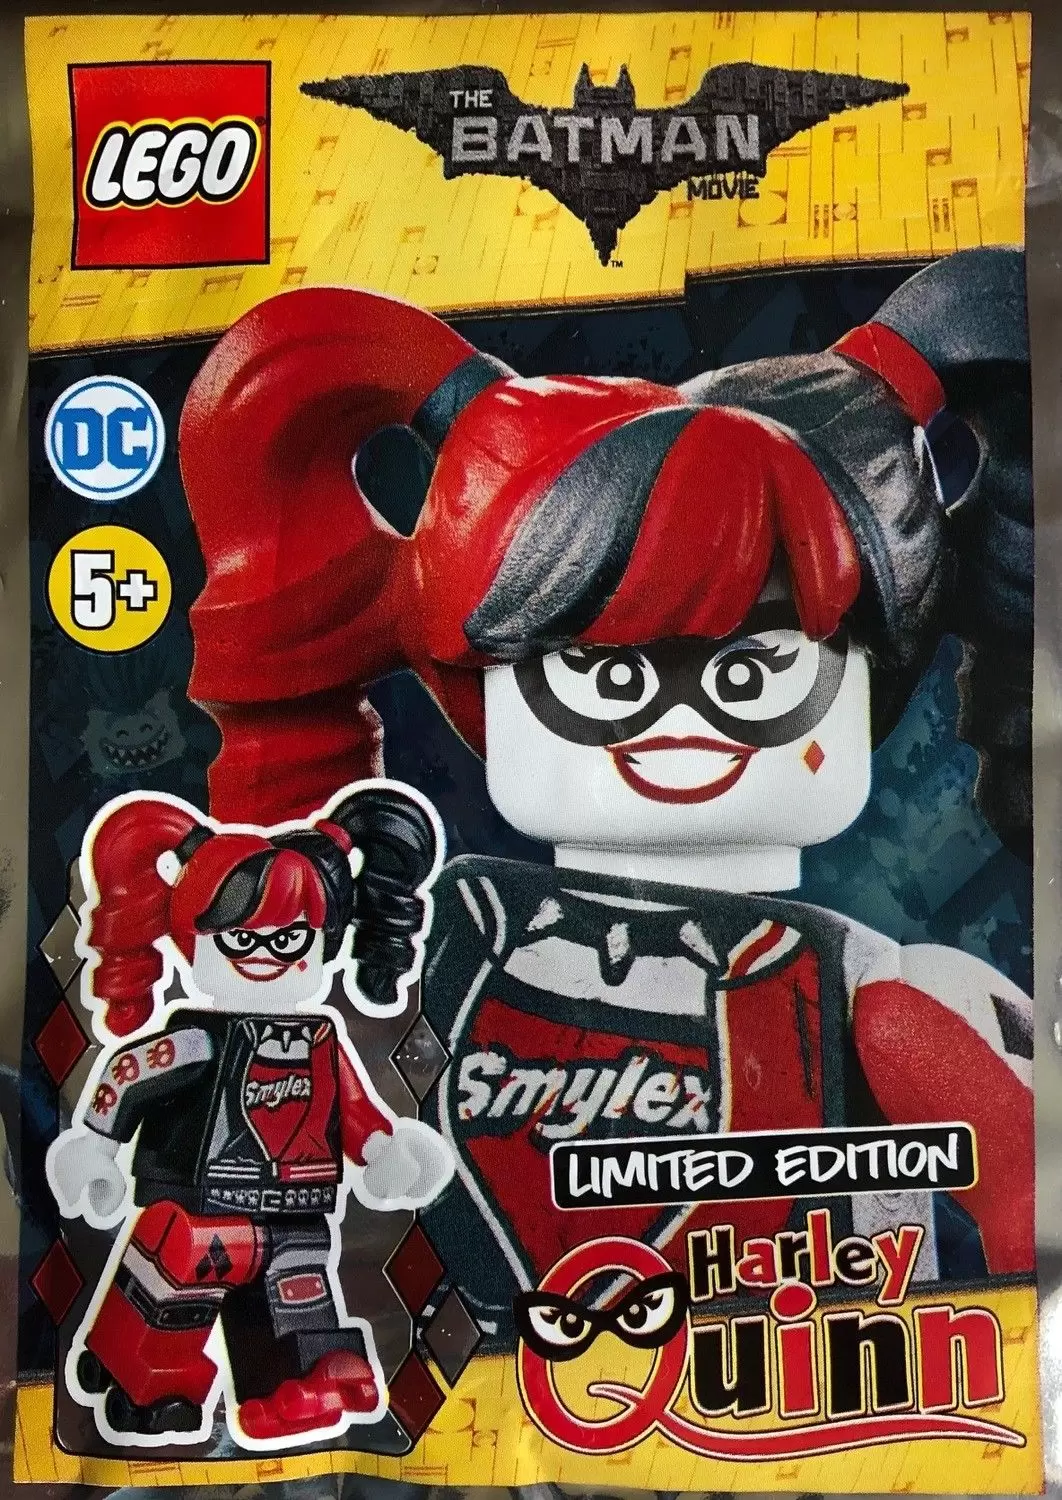 The LEGO Batman Movie - Harley Quinn